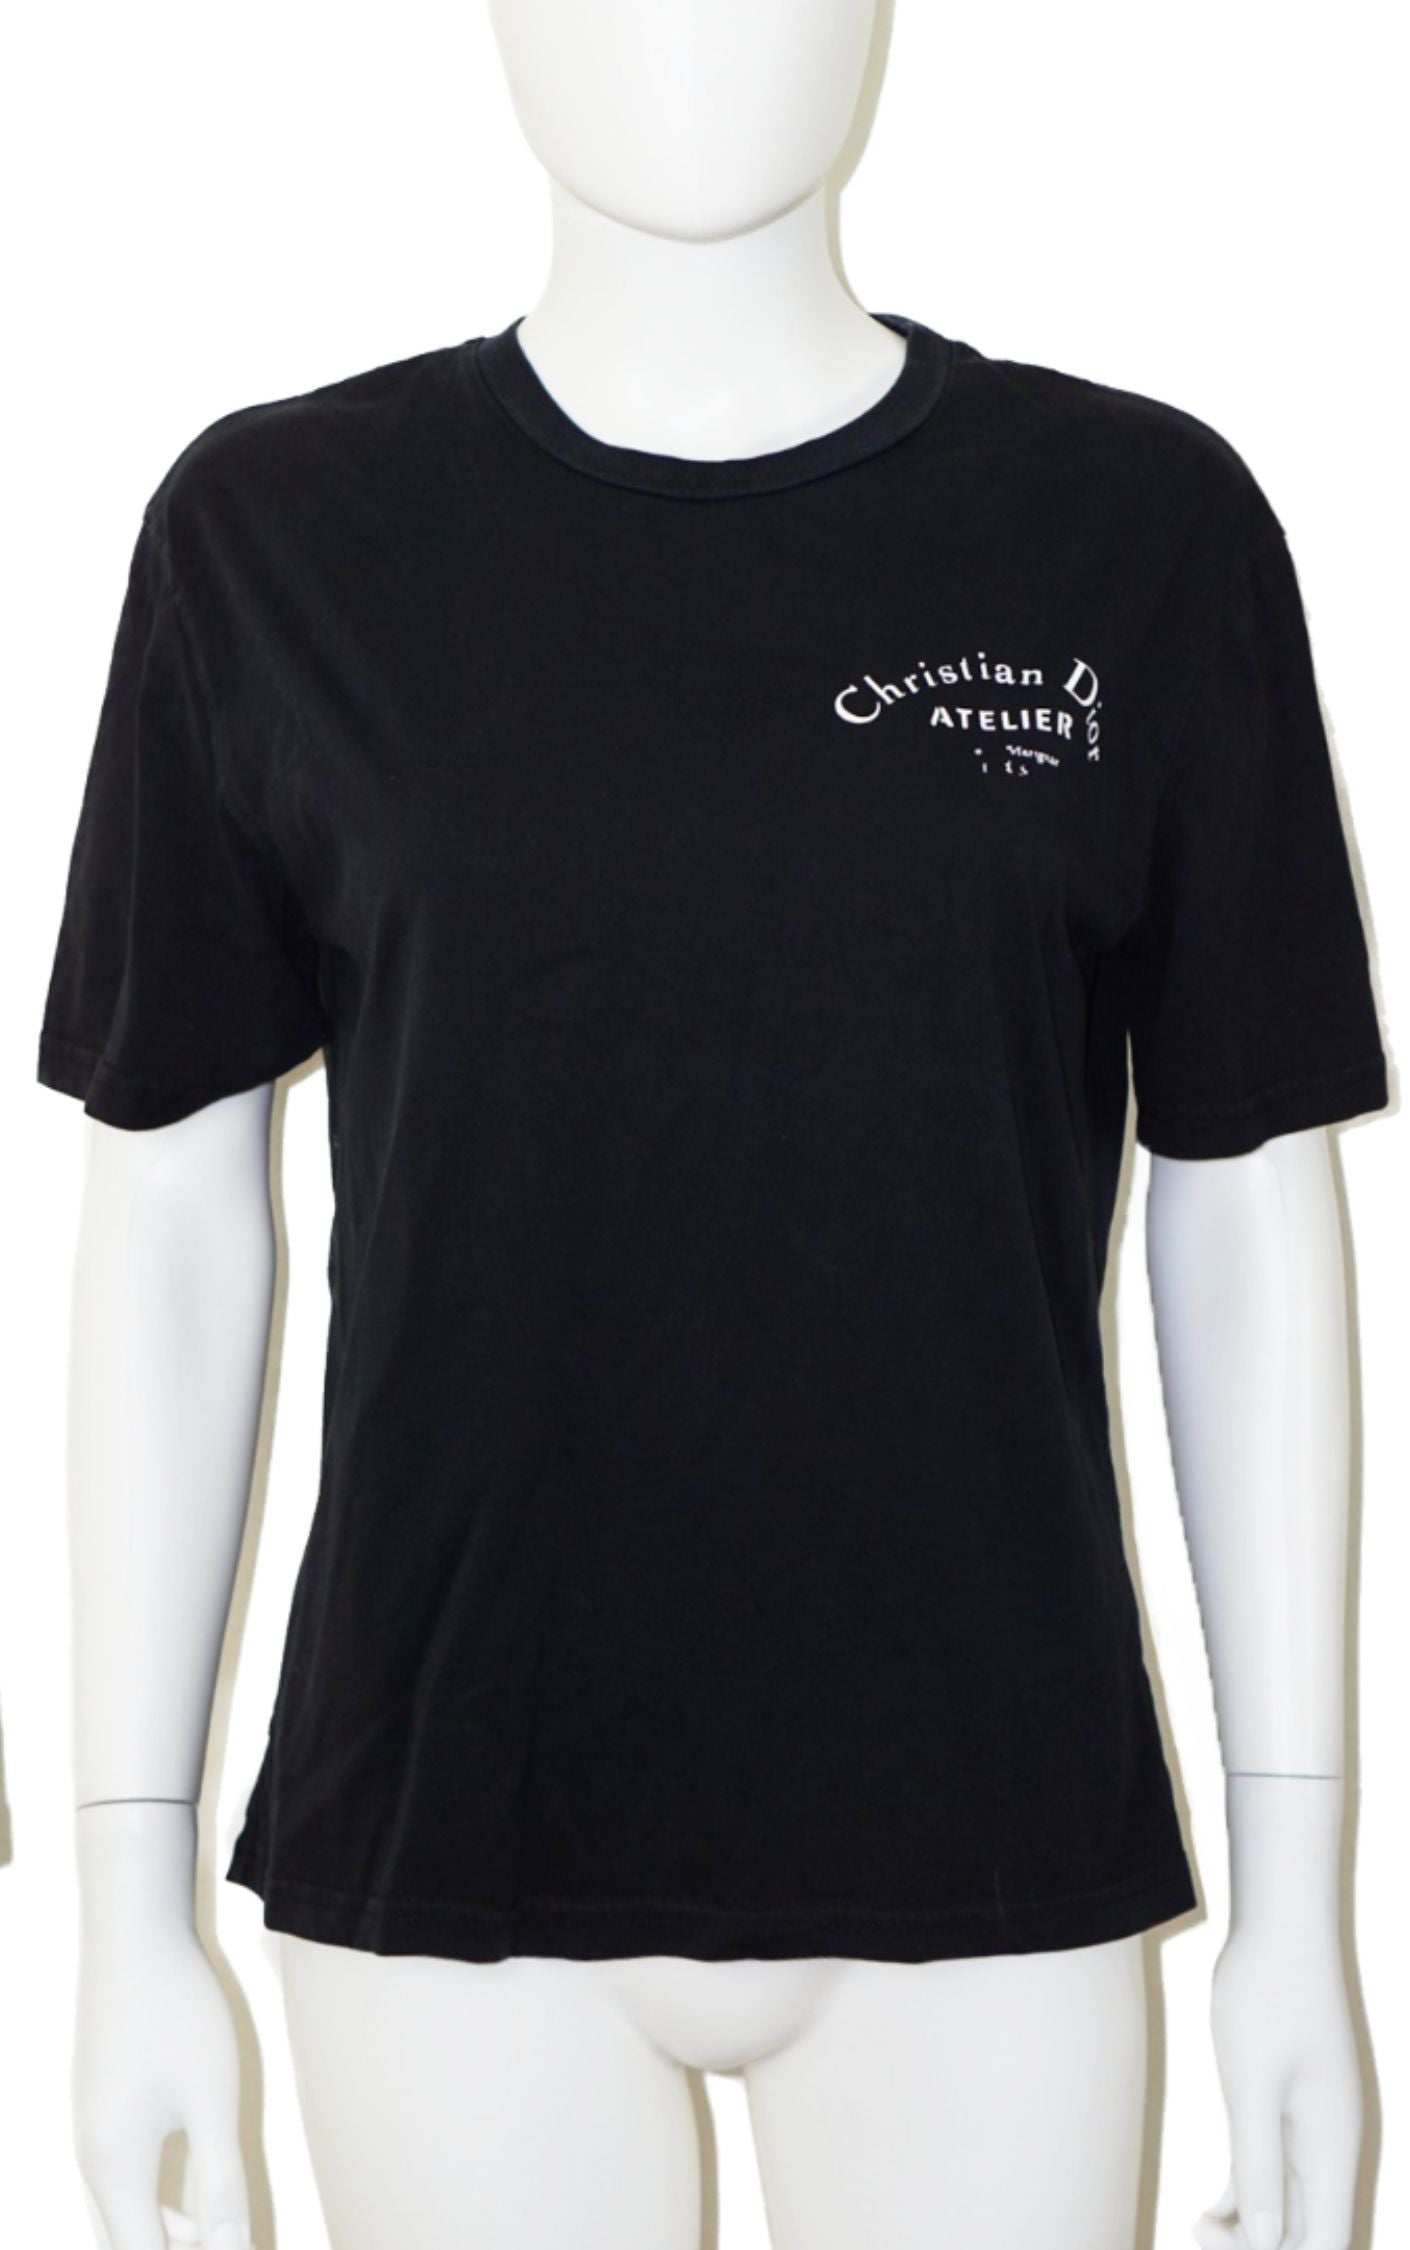 CHRISTIAN DIOR Atelier Logo Printed T-Shirt resellum